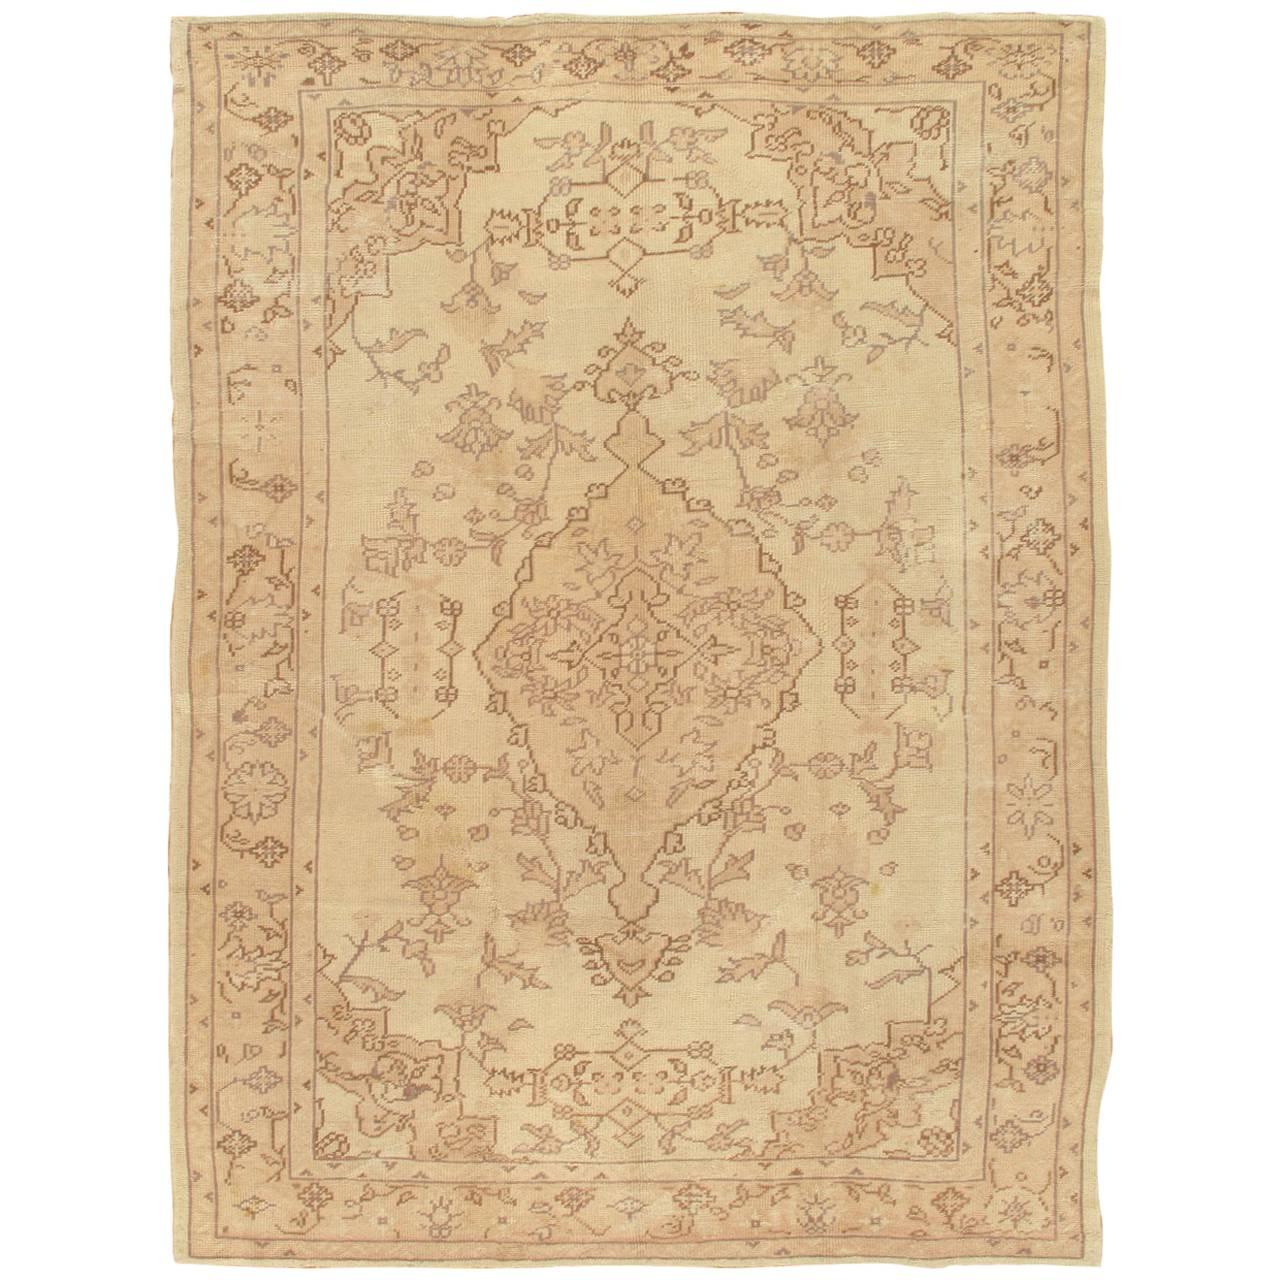 Antique Oushak Carpet, Handmade Turkish Oriental Rug, Beige, Taupe, Soft